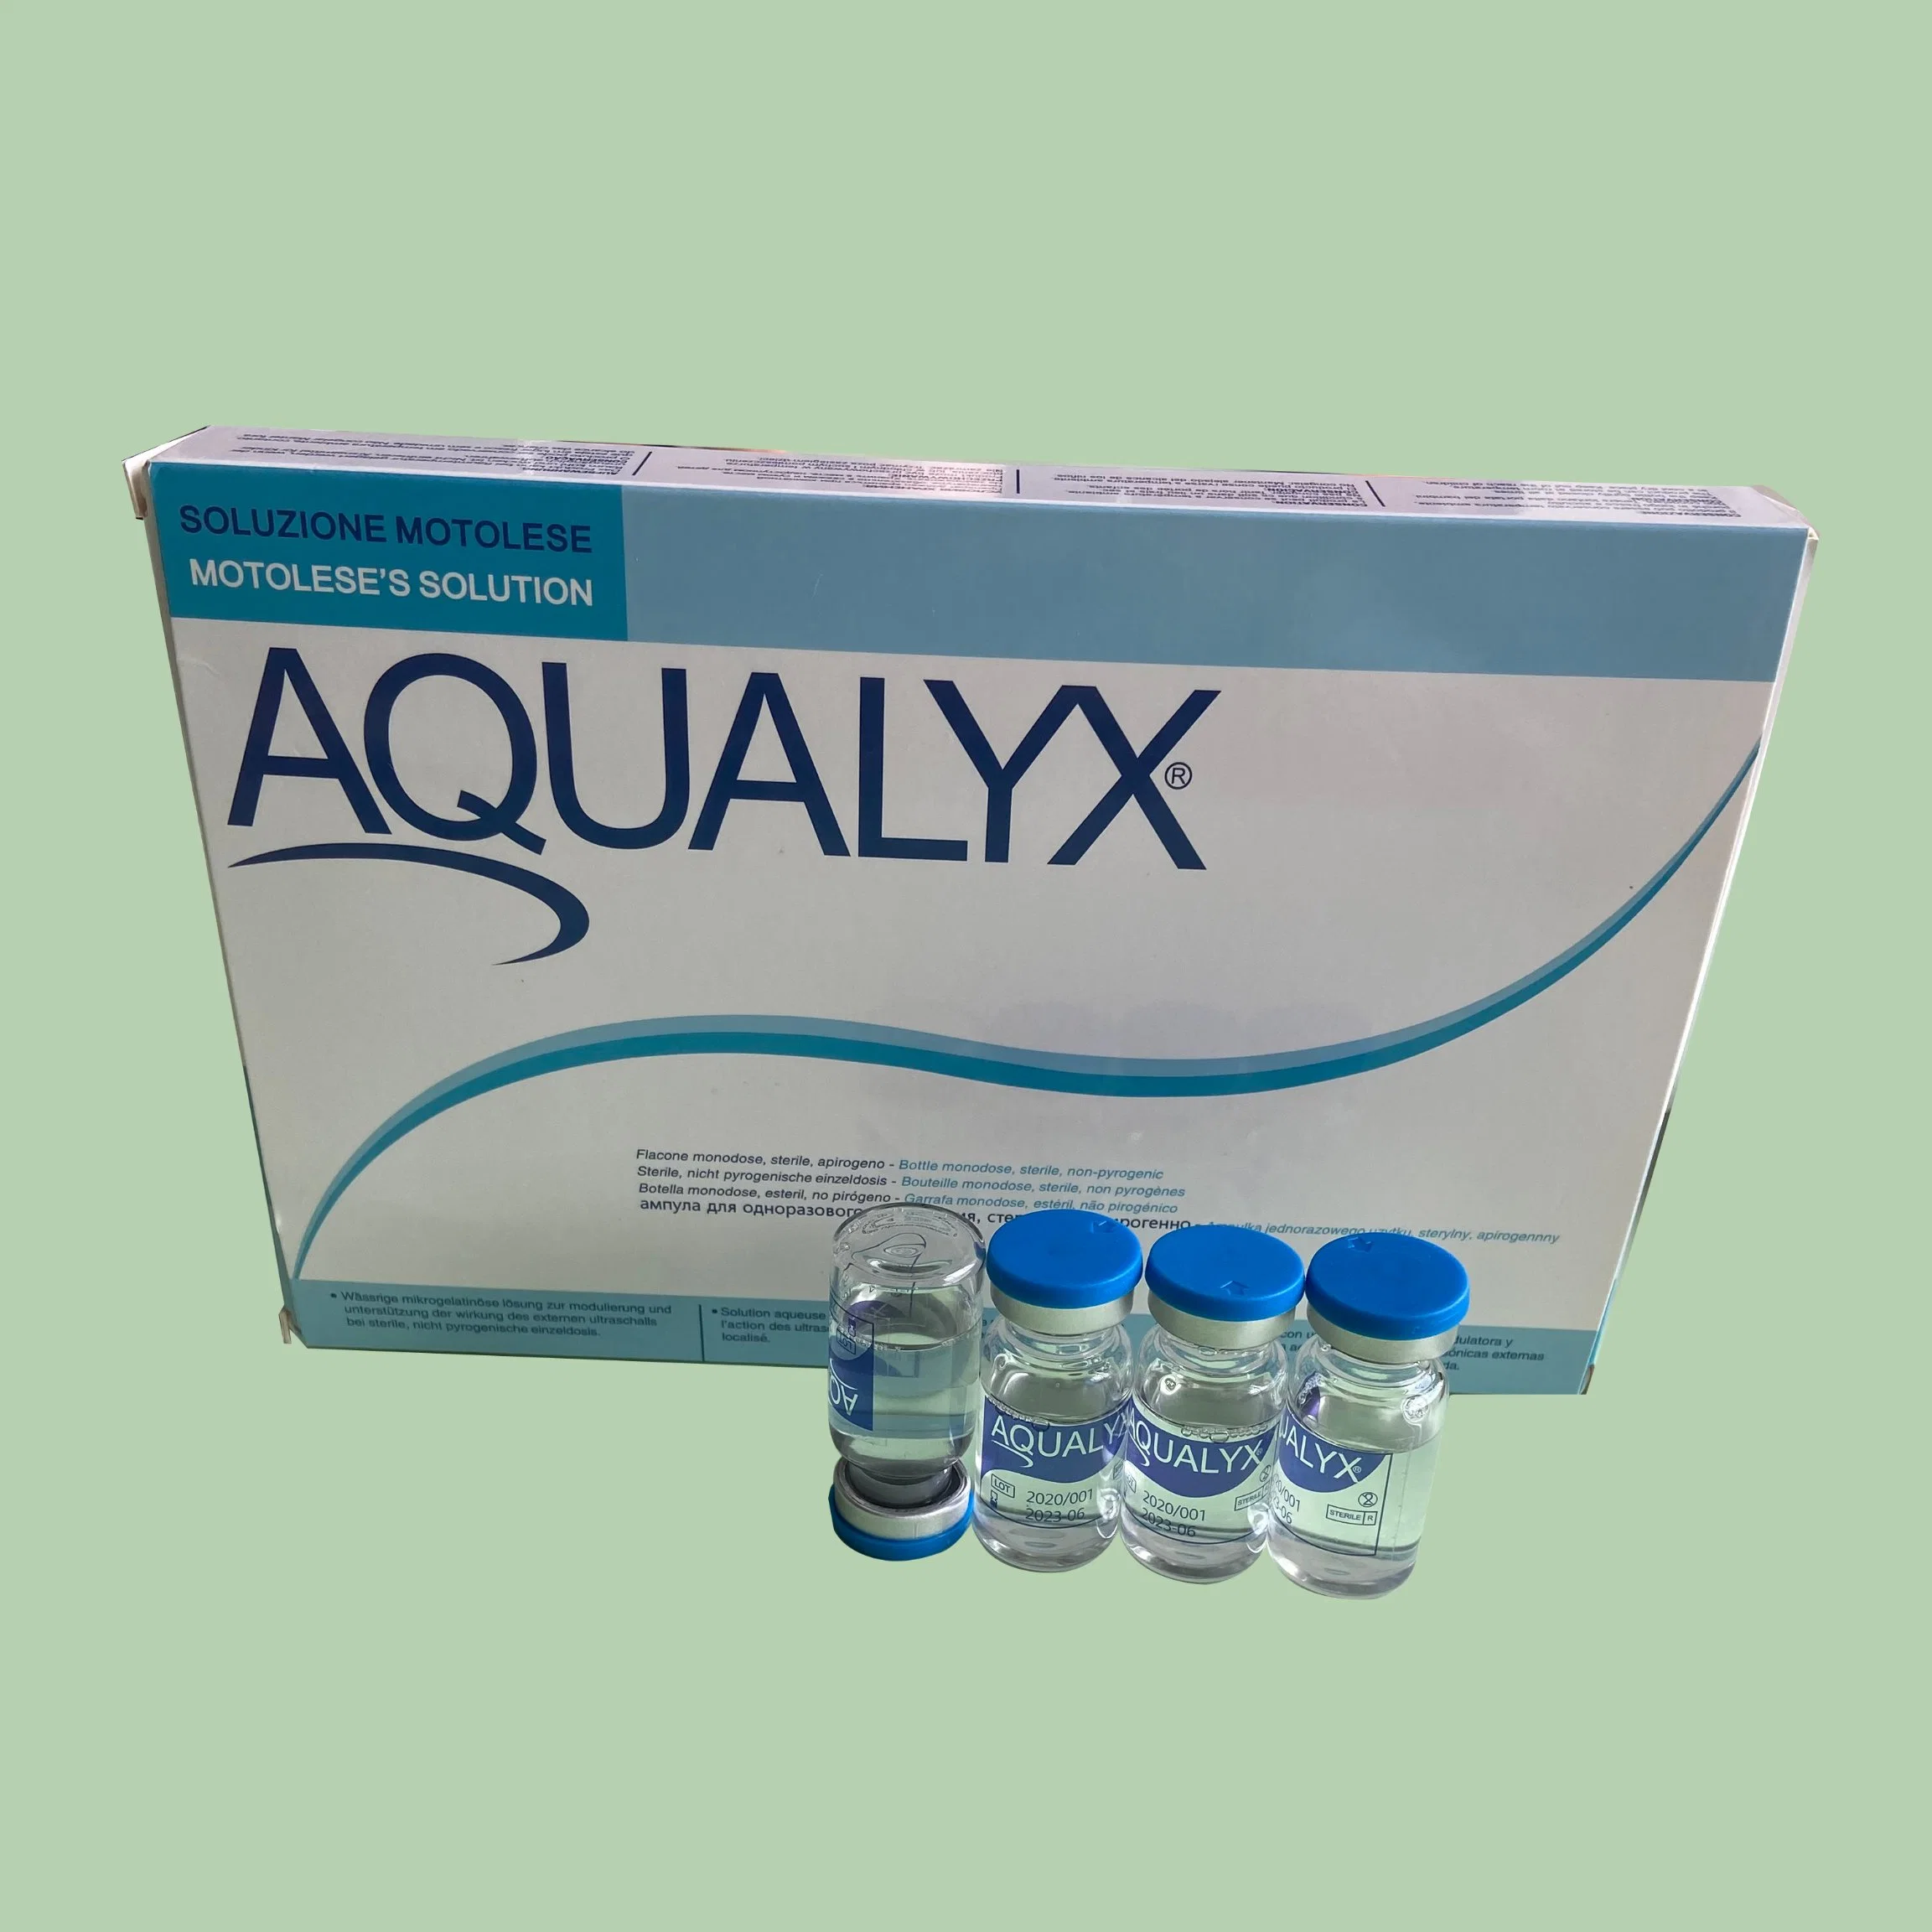 Lipolab Ppc Solution Aqualyx Aqualyx Fat Dissolving Injection Aqualyx Injection